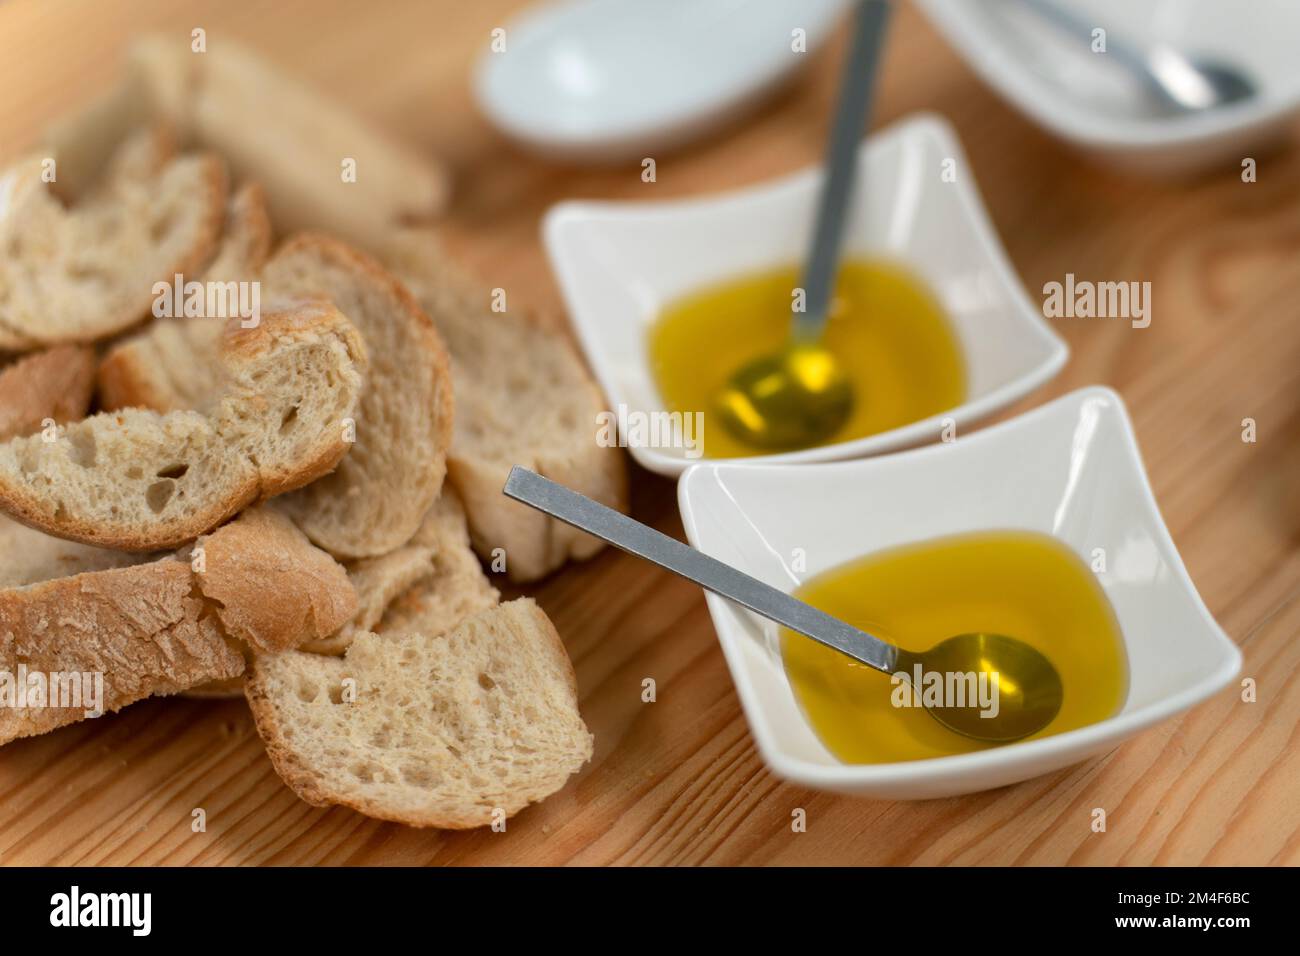 Olivenöl Stockfoto